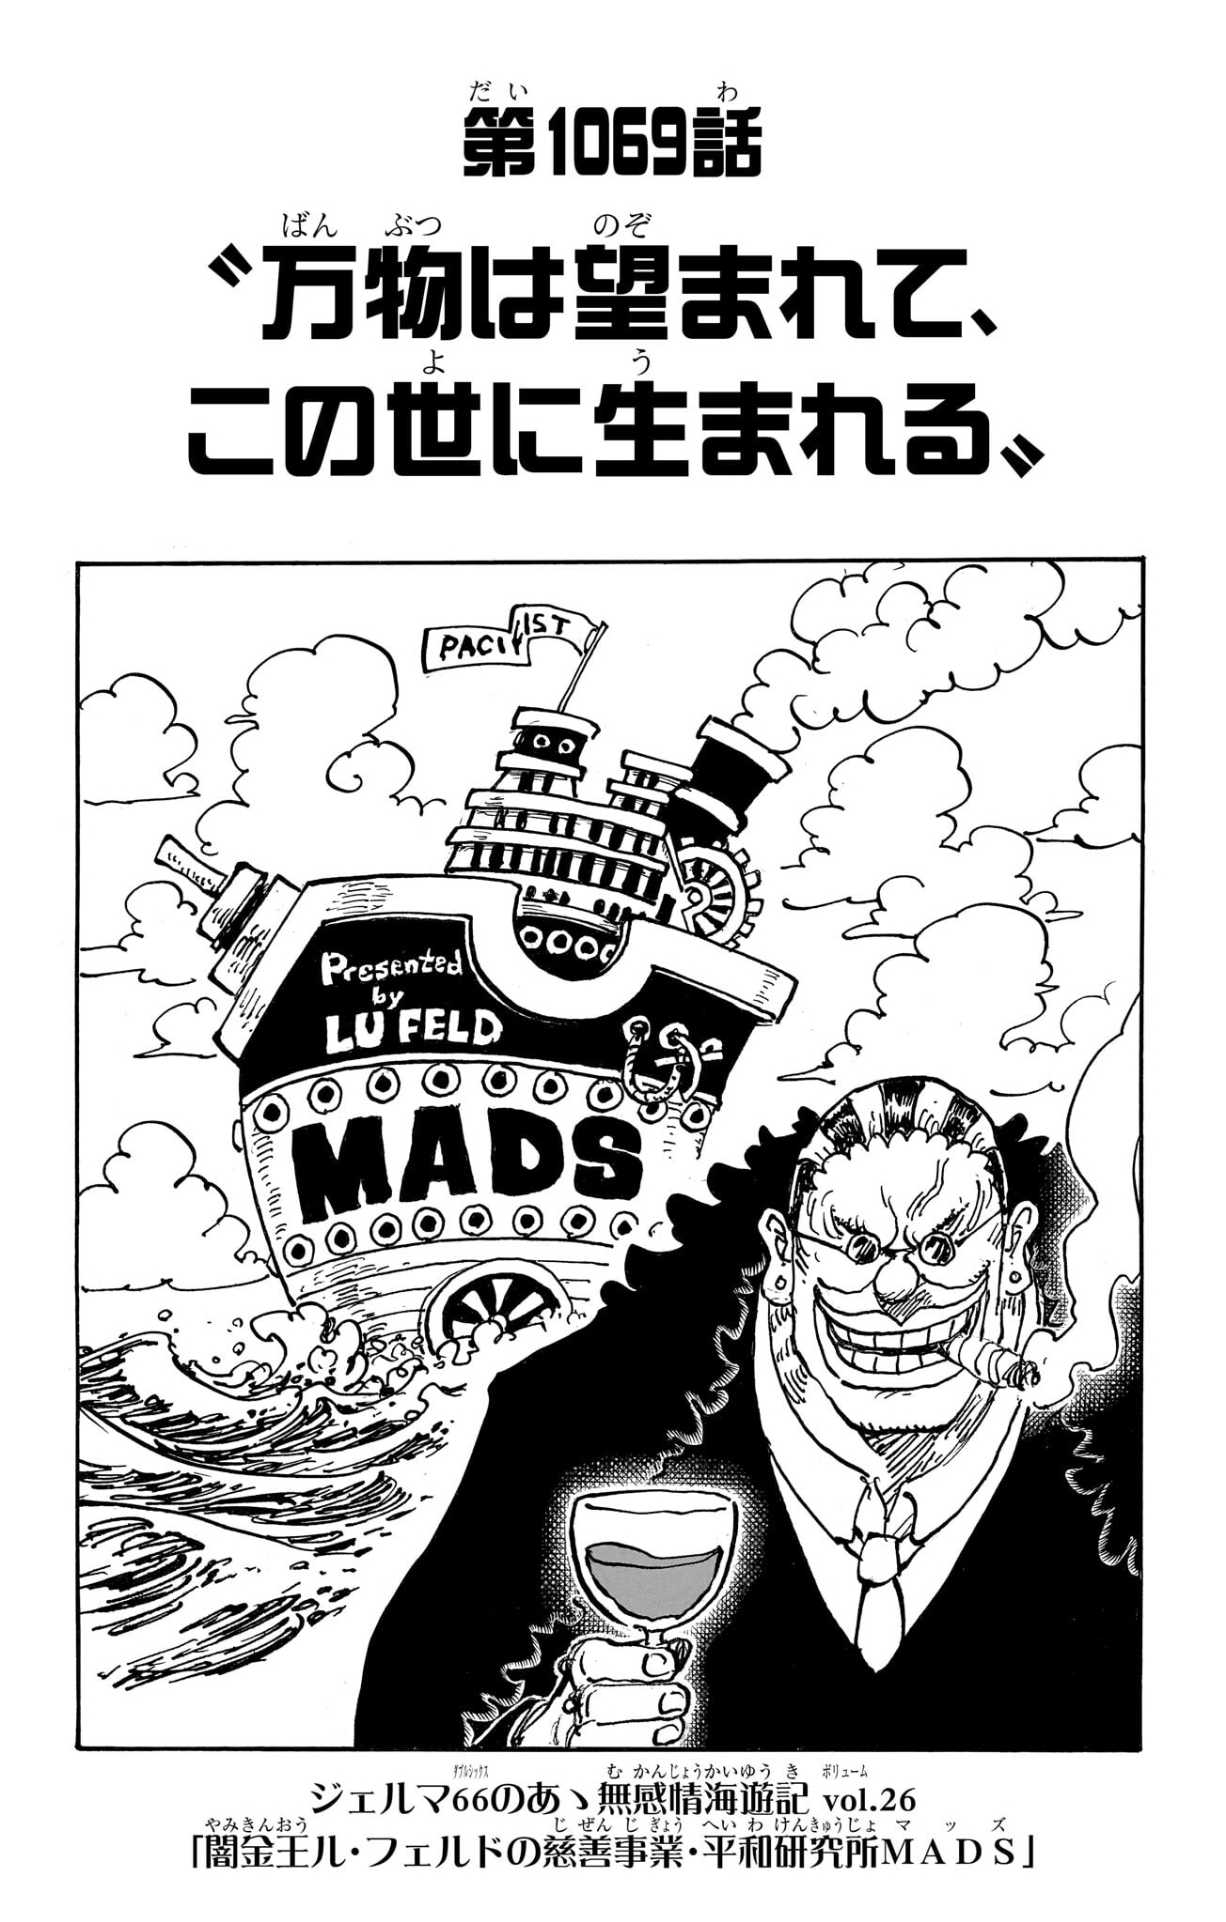 One Piece Chapter 1069 Chapter 1069 | One Piece Wiki | Fandom